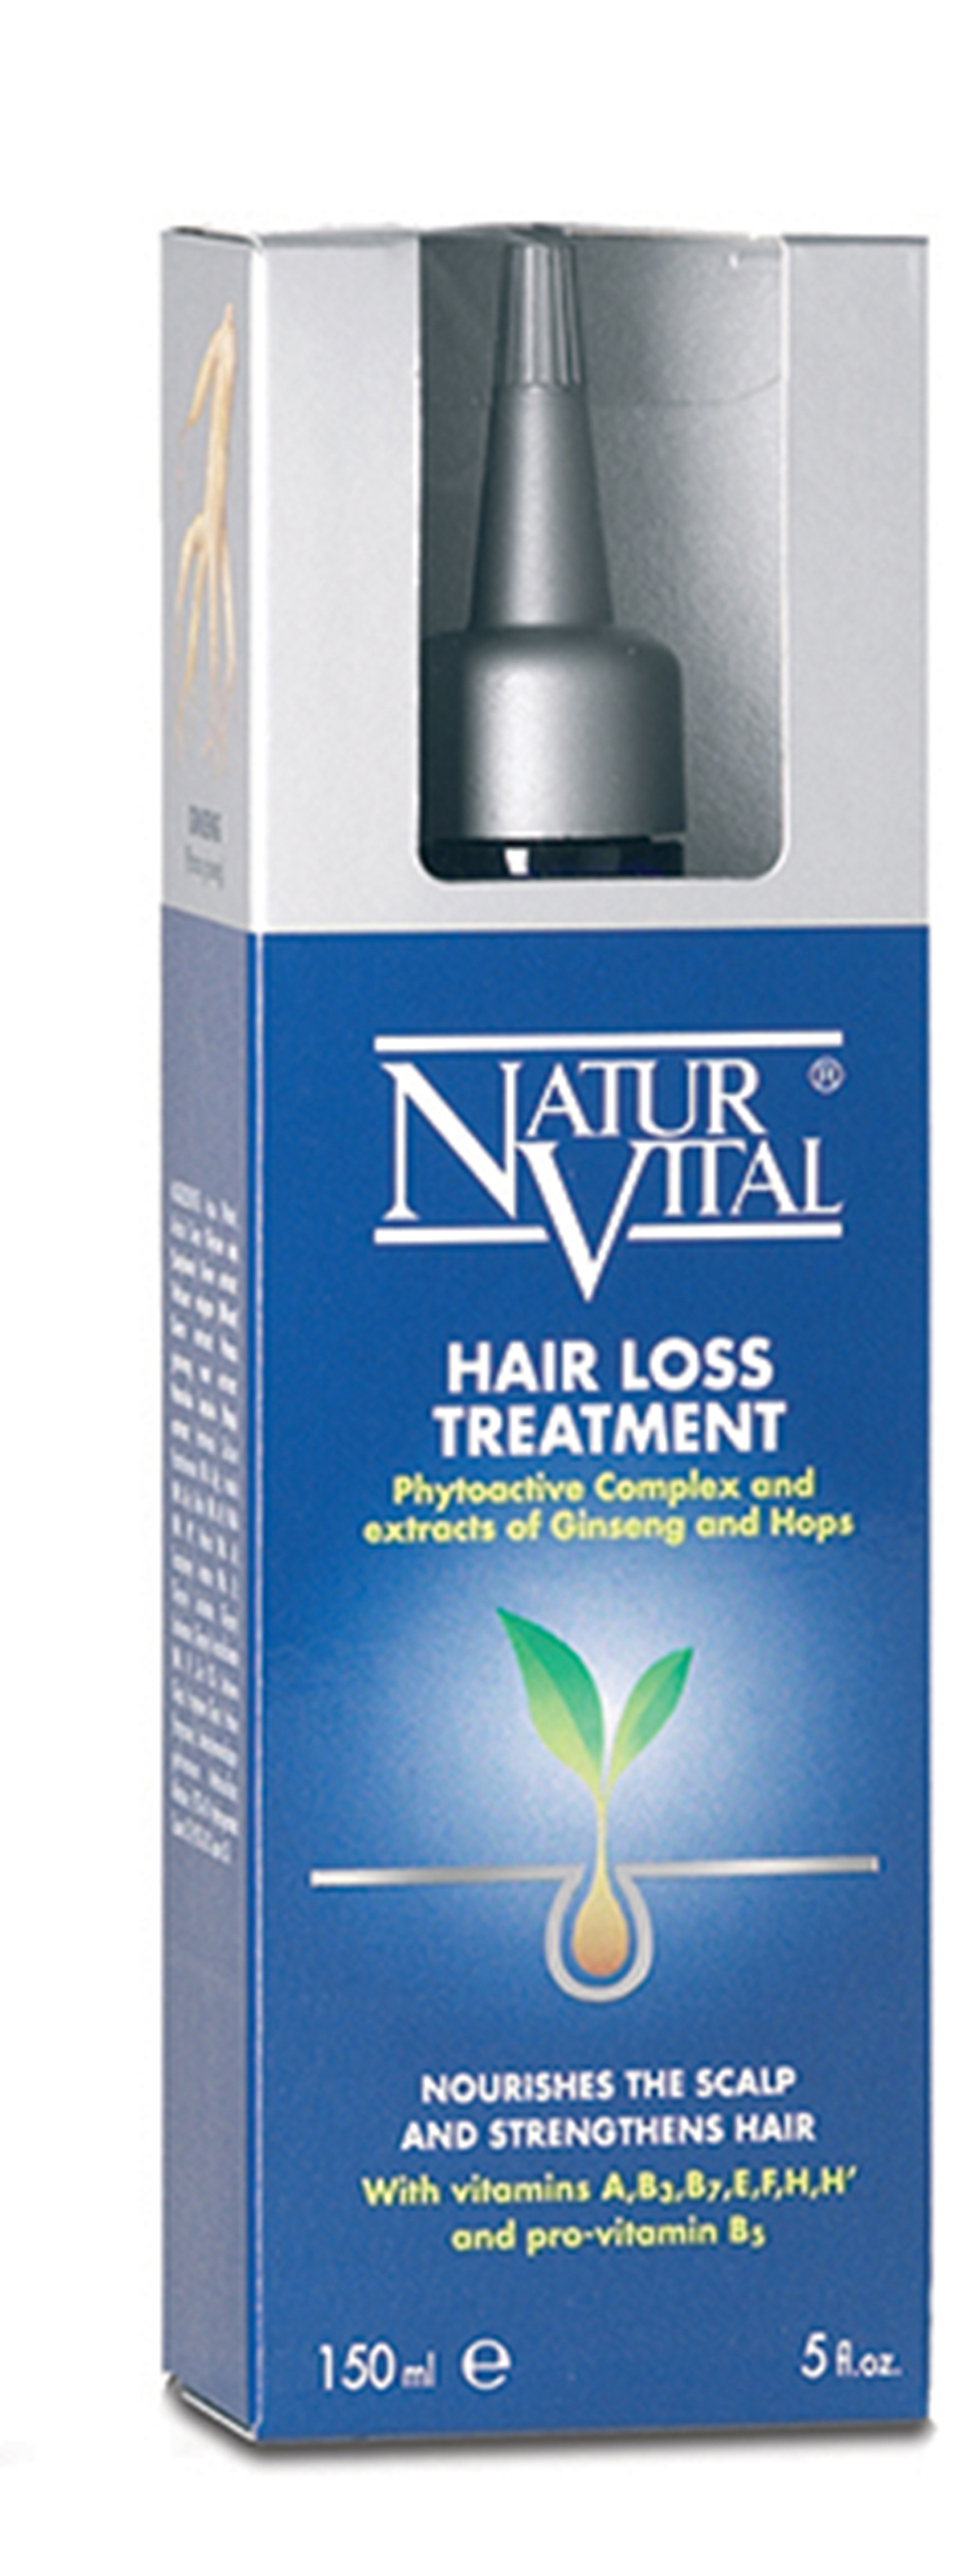 NaturVital hair loss treatment